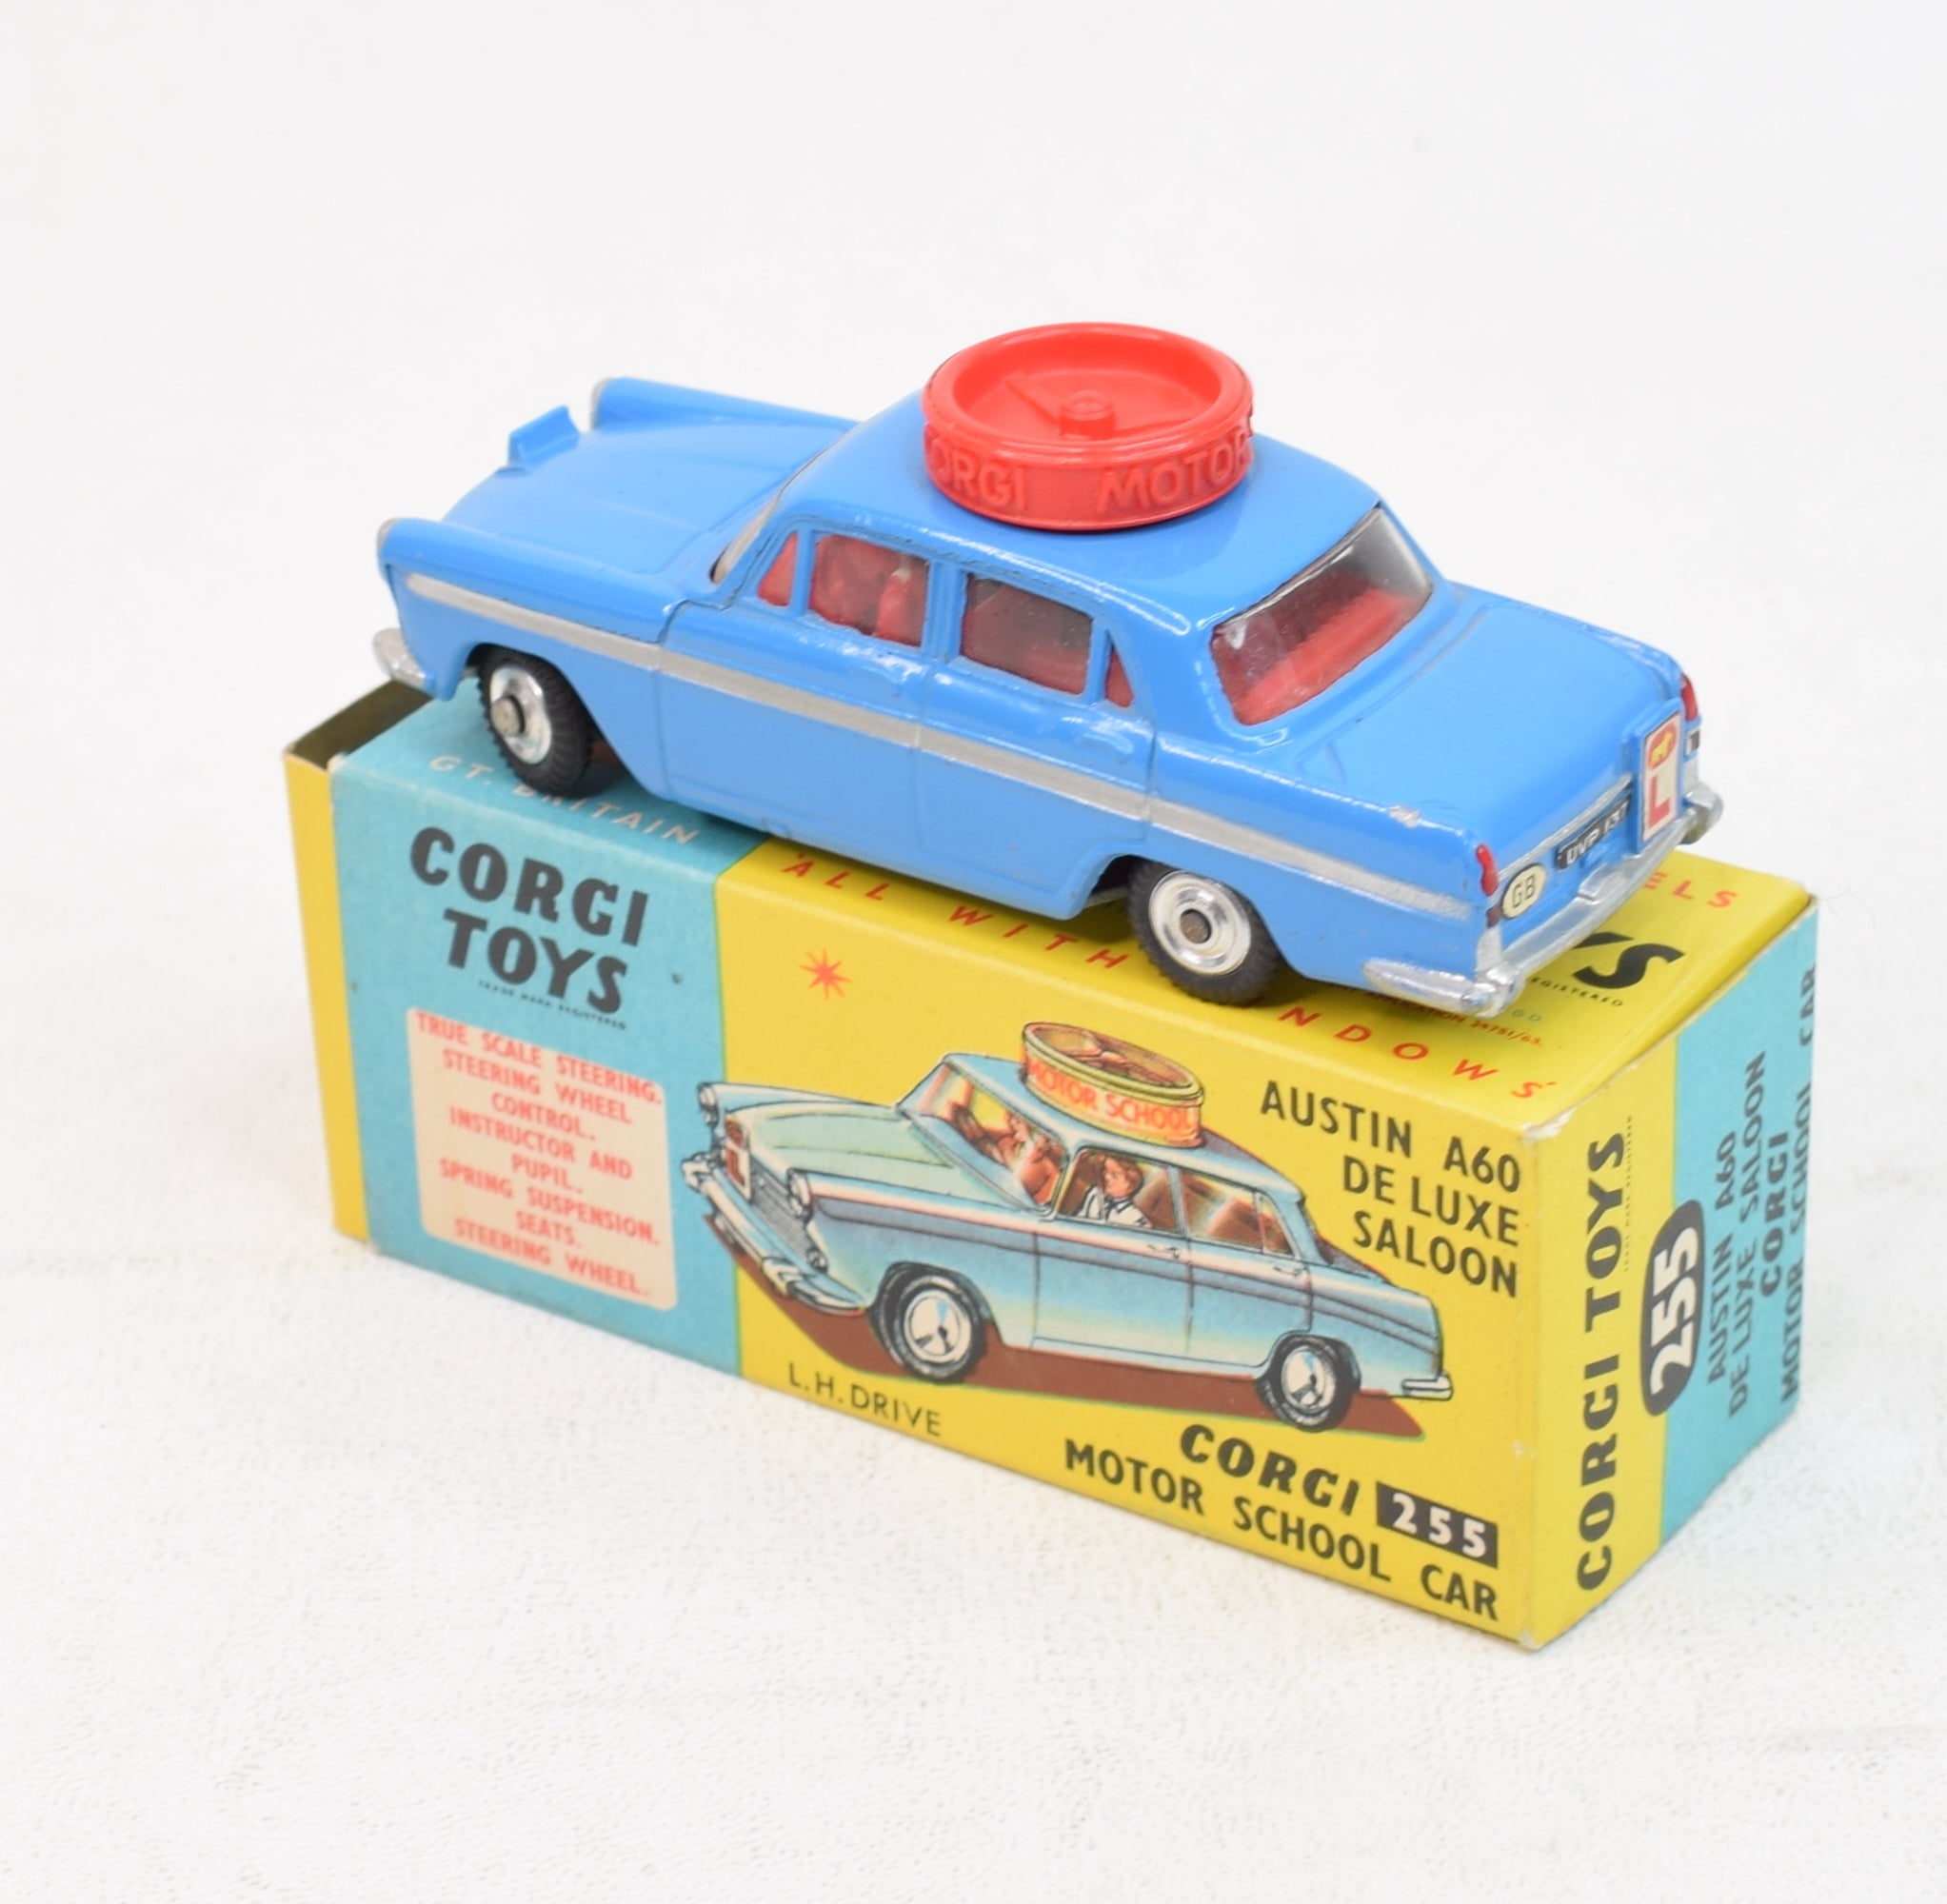 Corgi Toys 255 Motor School Very Near Mint/Boxed – JK DIE-CAST MODELS